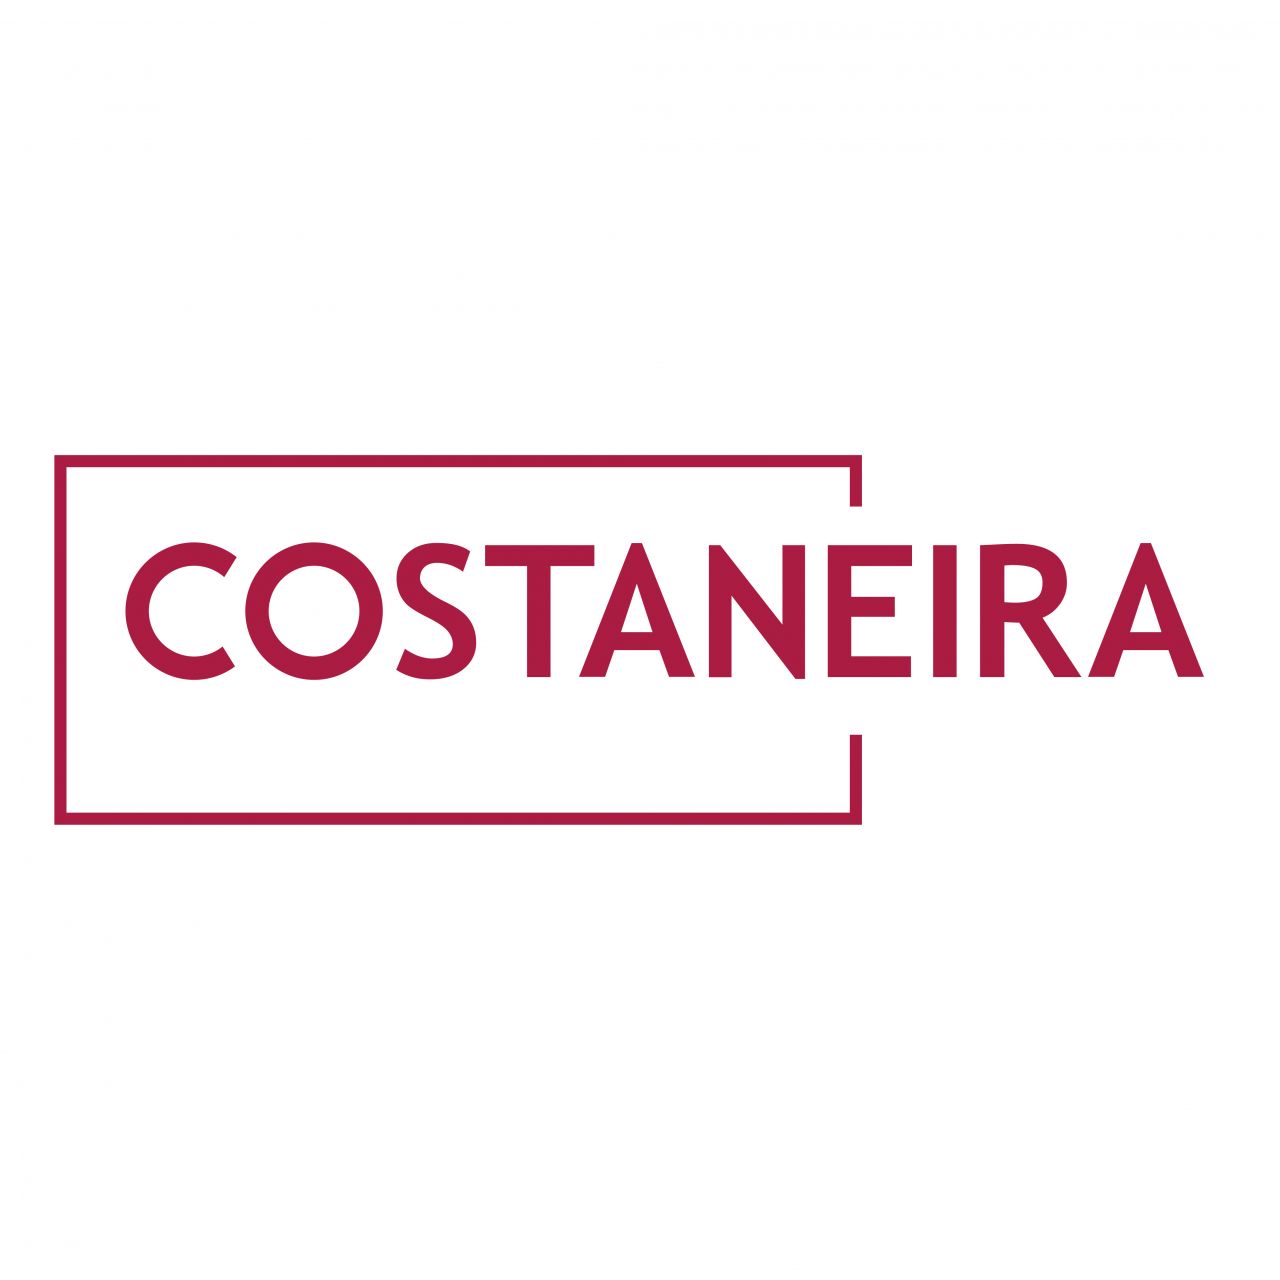 Costaneira